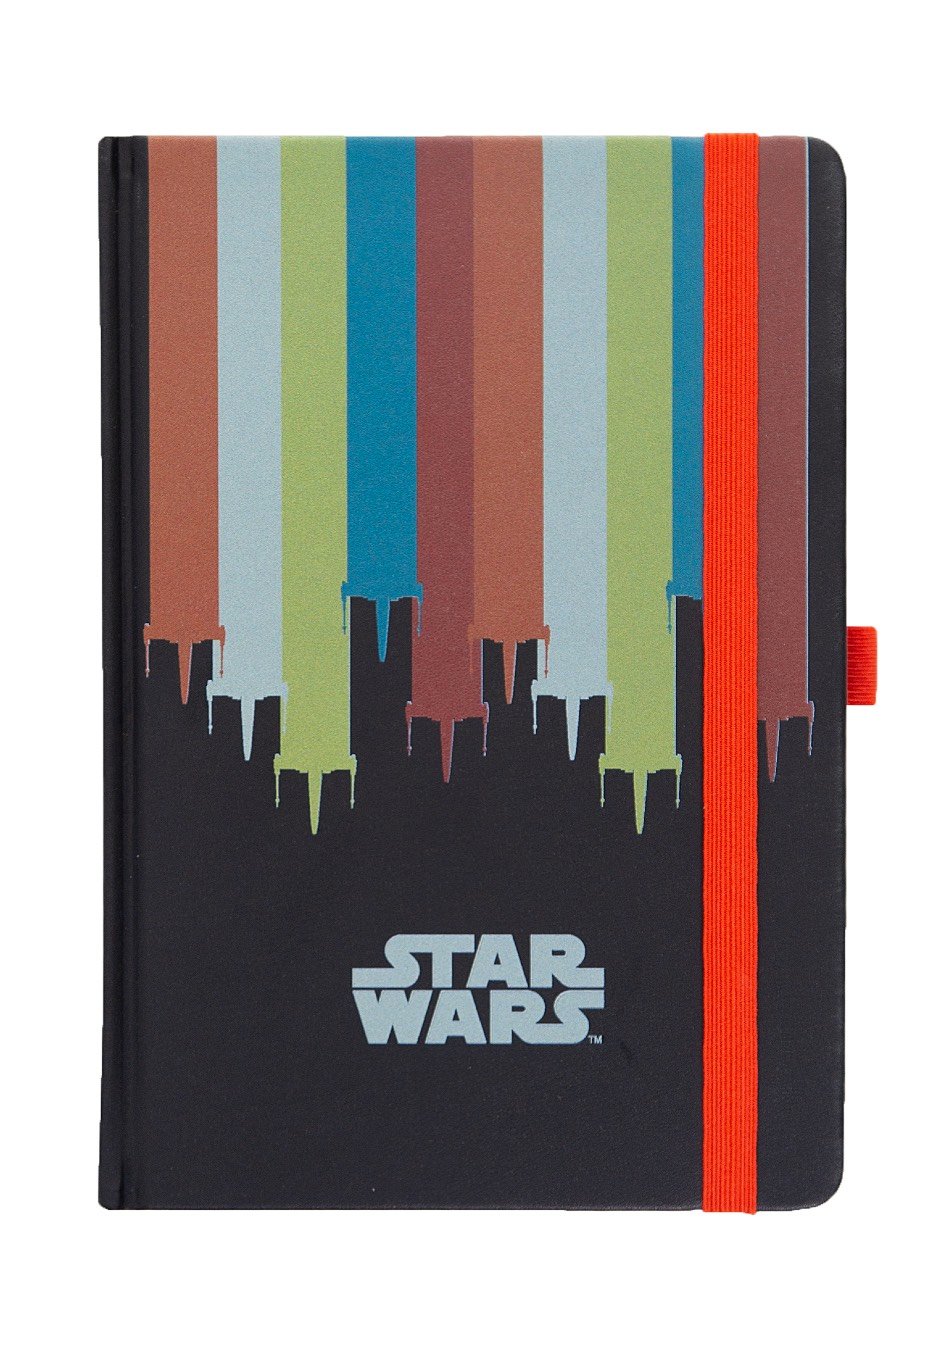 Star Wars - Nostalgia Multicolored - Notebook